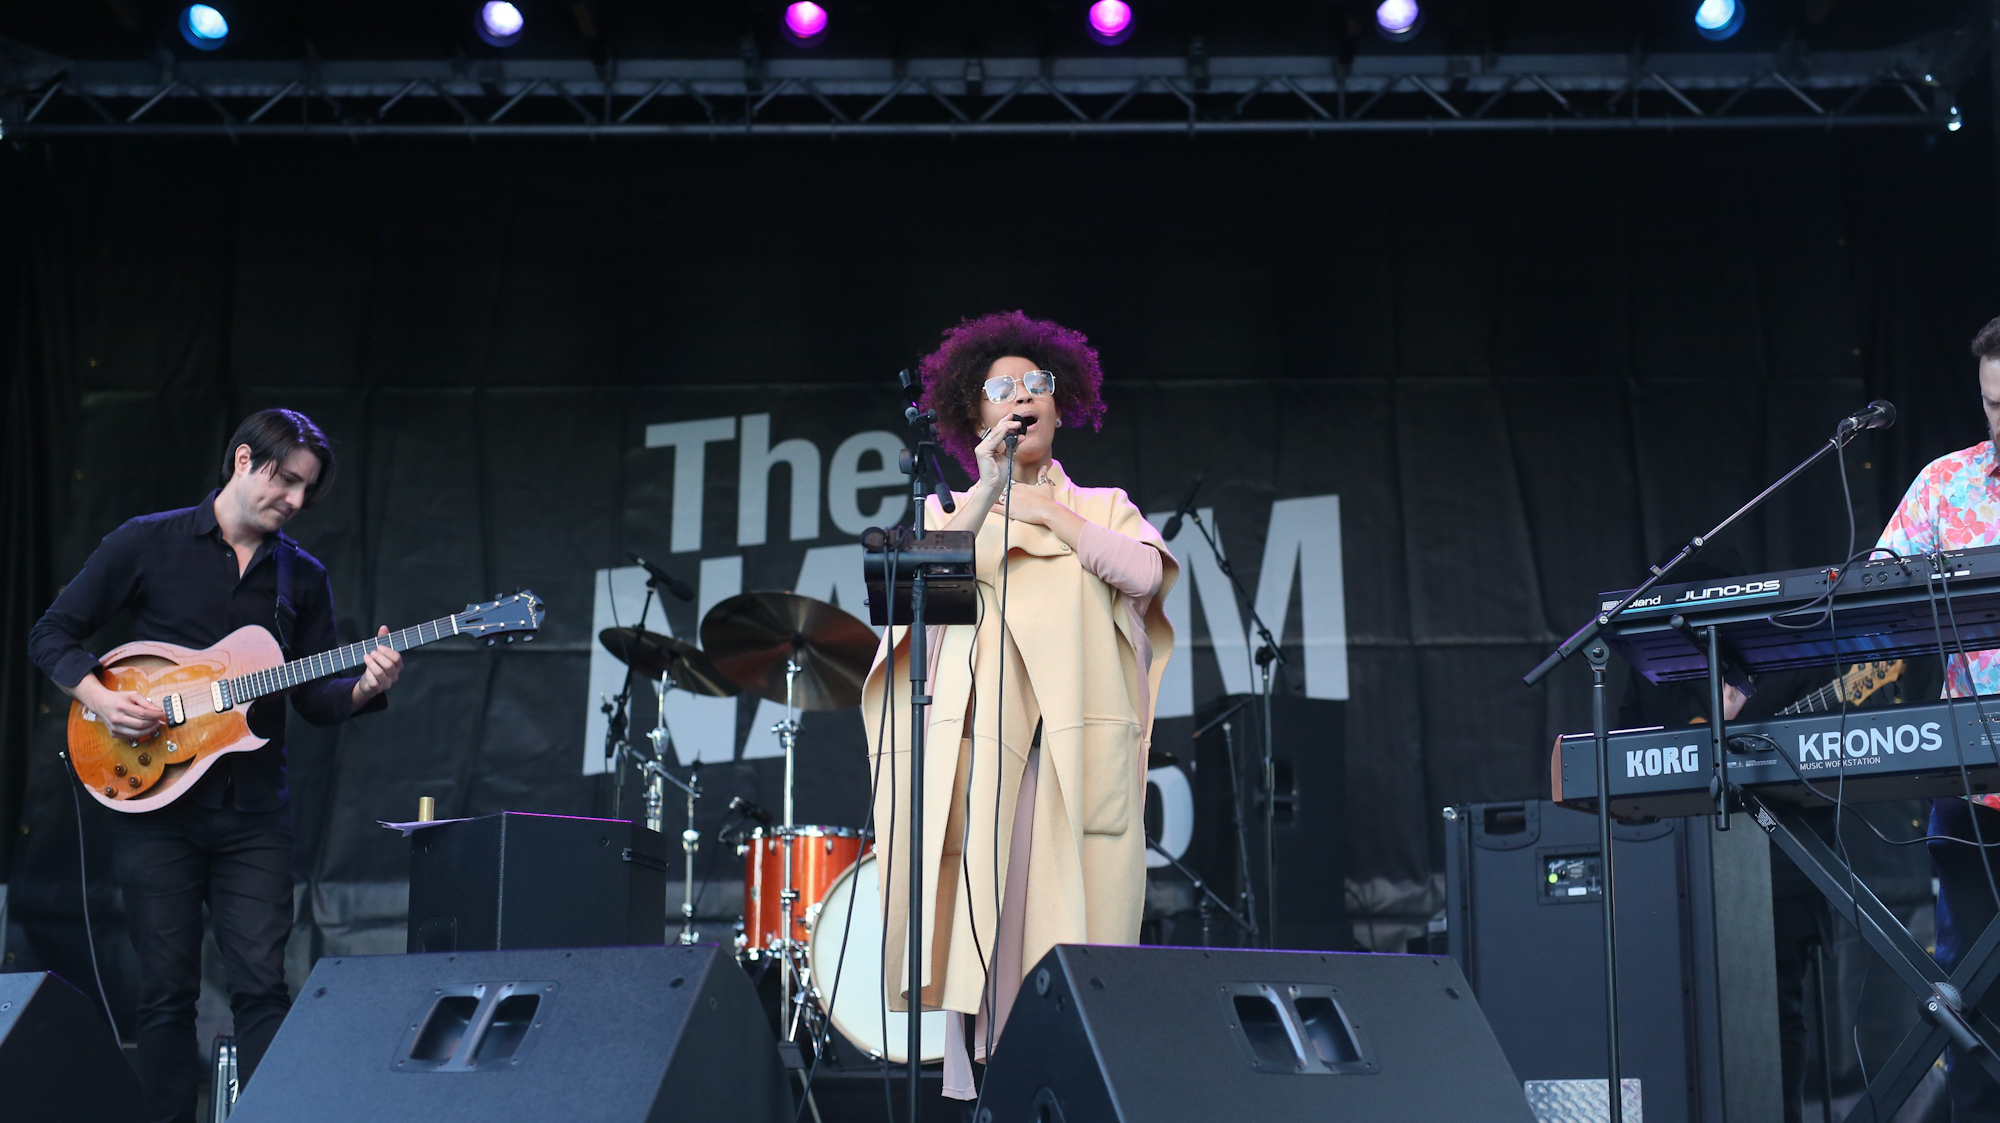 Bands at NAMM Returns, Offering Musicians A OnceinALifetime NAMM